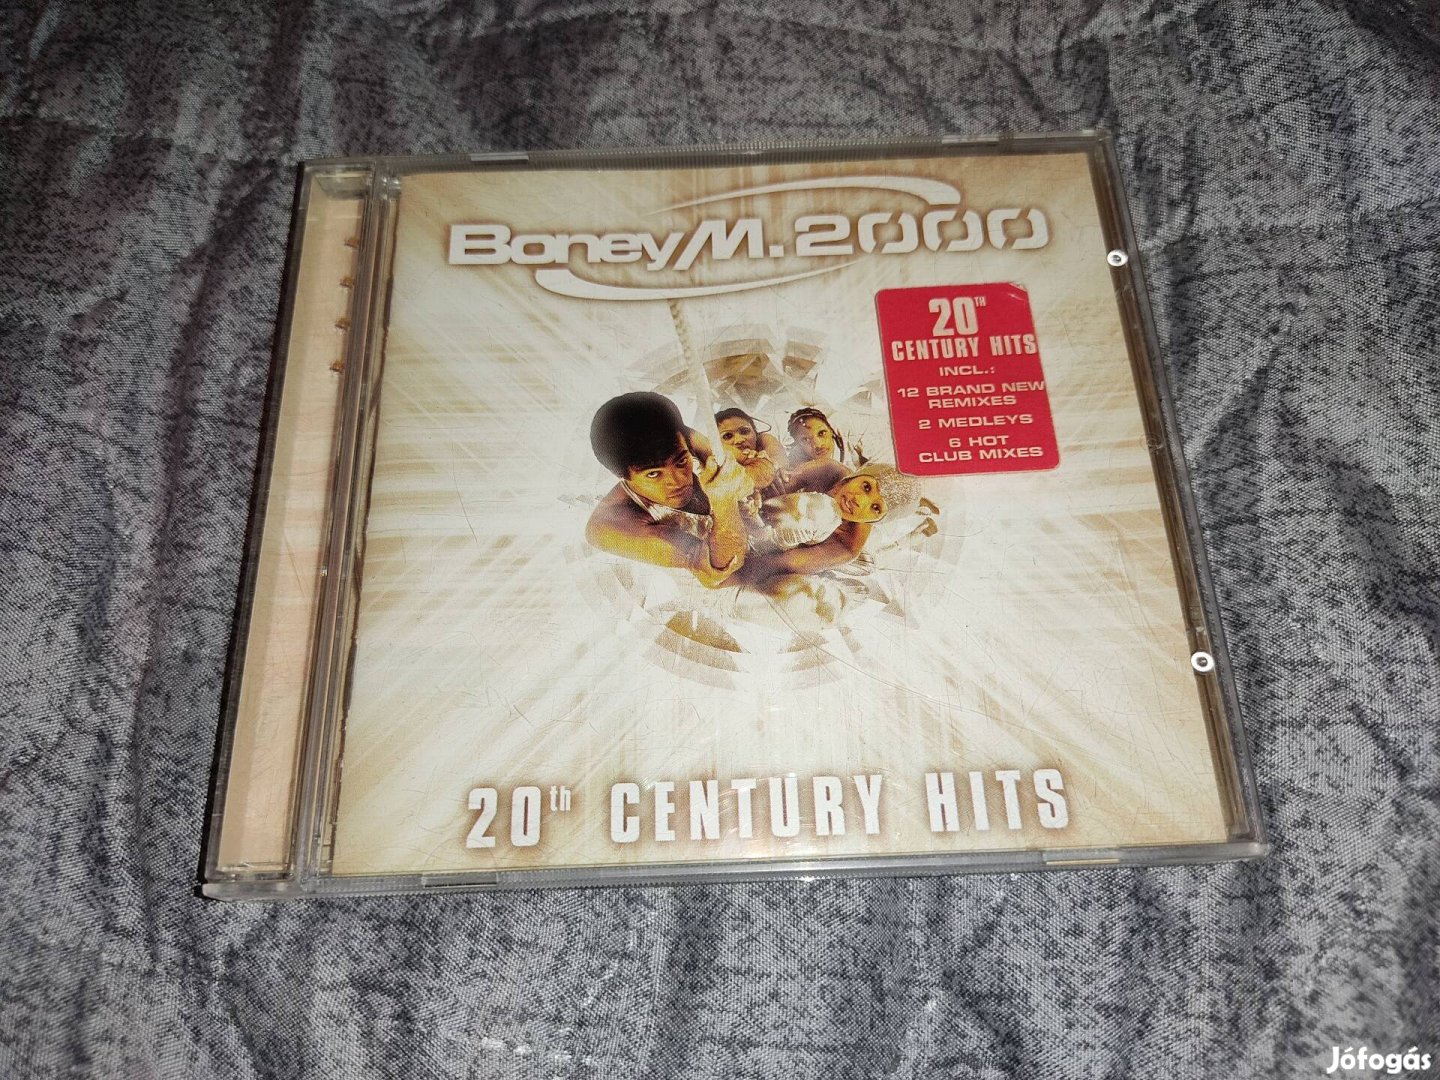 Boney M 2000- 20th Century Hits CD (1999)